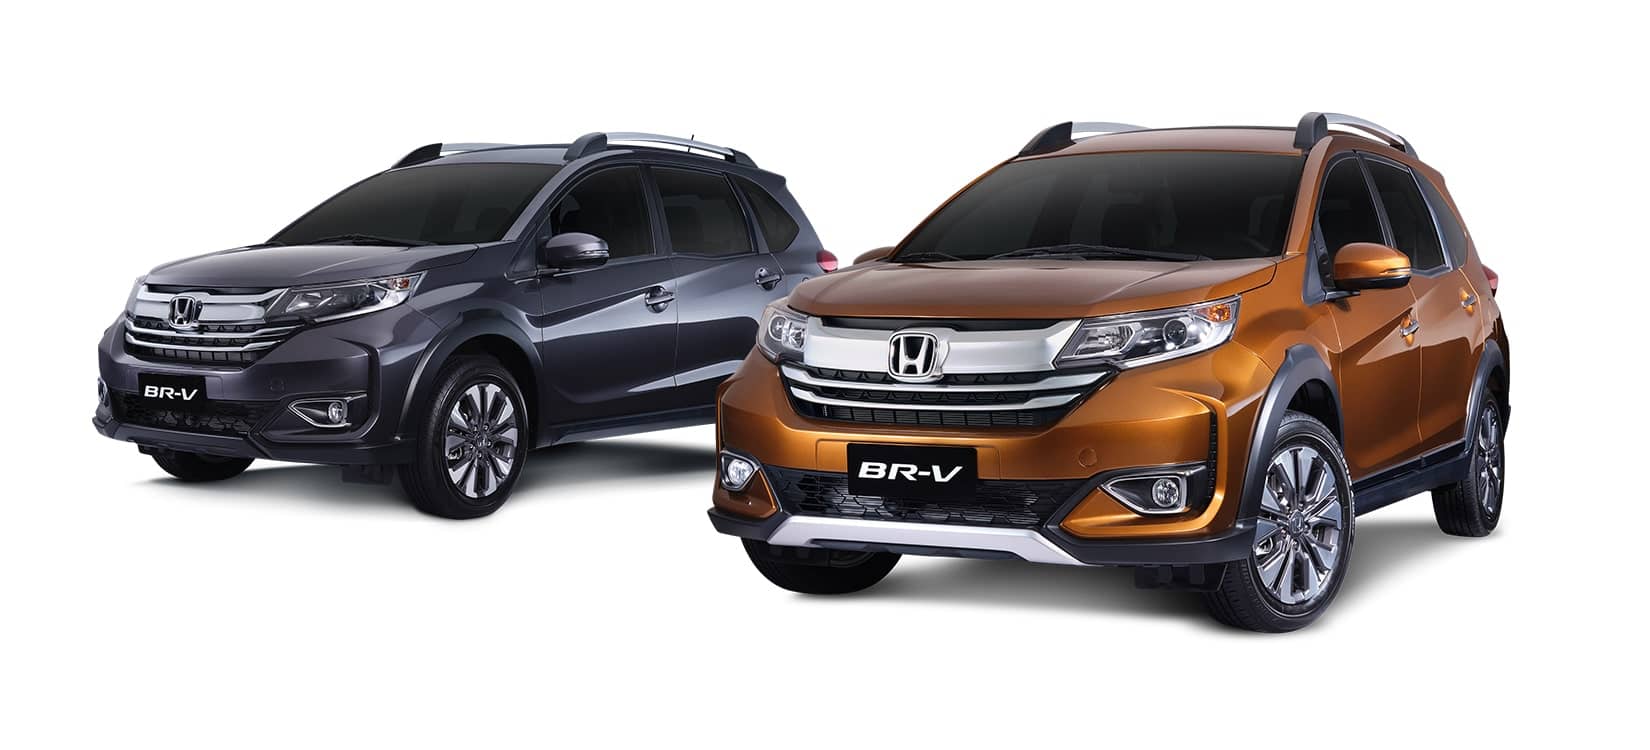 Honda Cars Philippines › All-New Honda BR-V now on Philippine